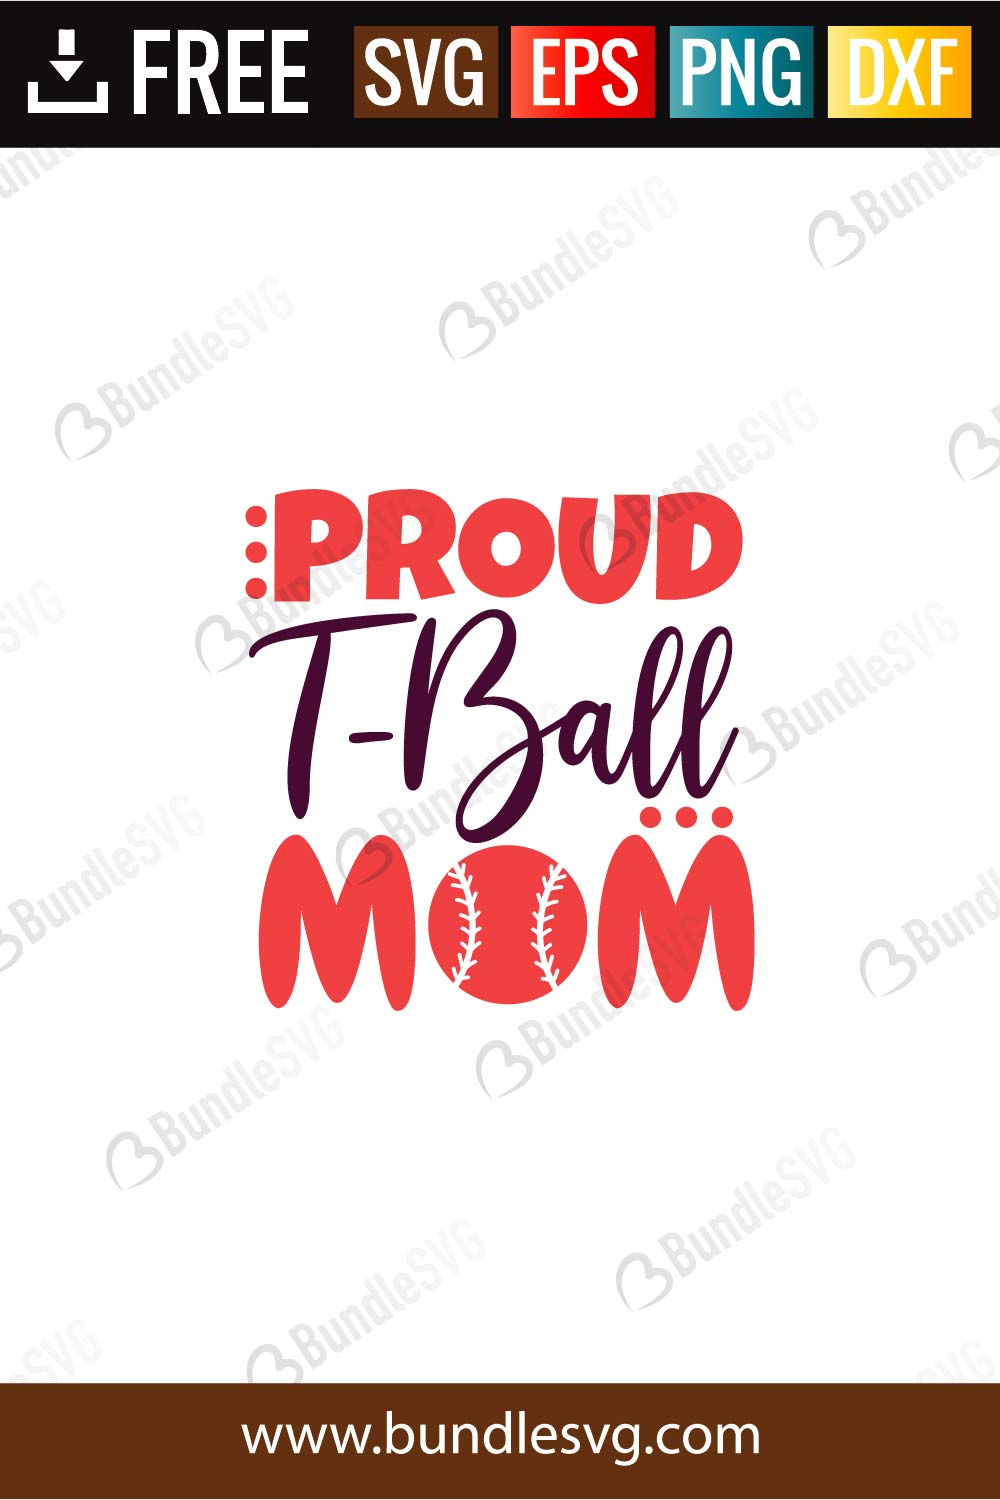 Download Proud T Ball Mom Svg Cut Files Bundlesvg